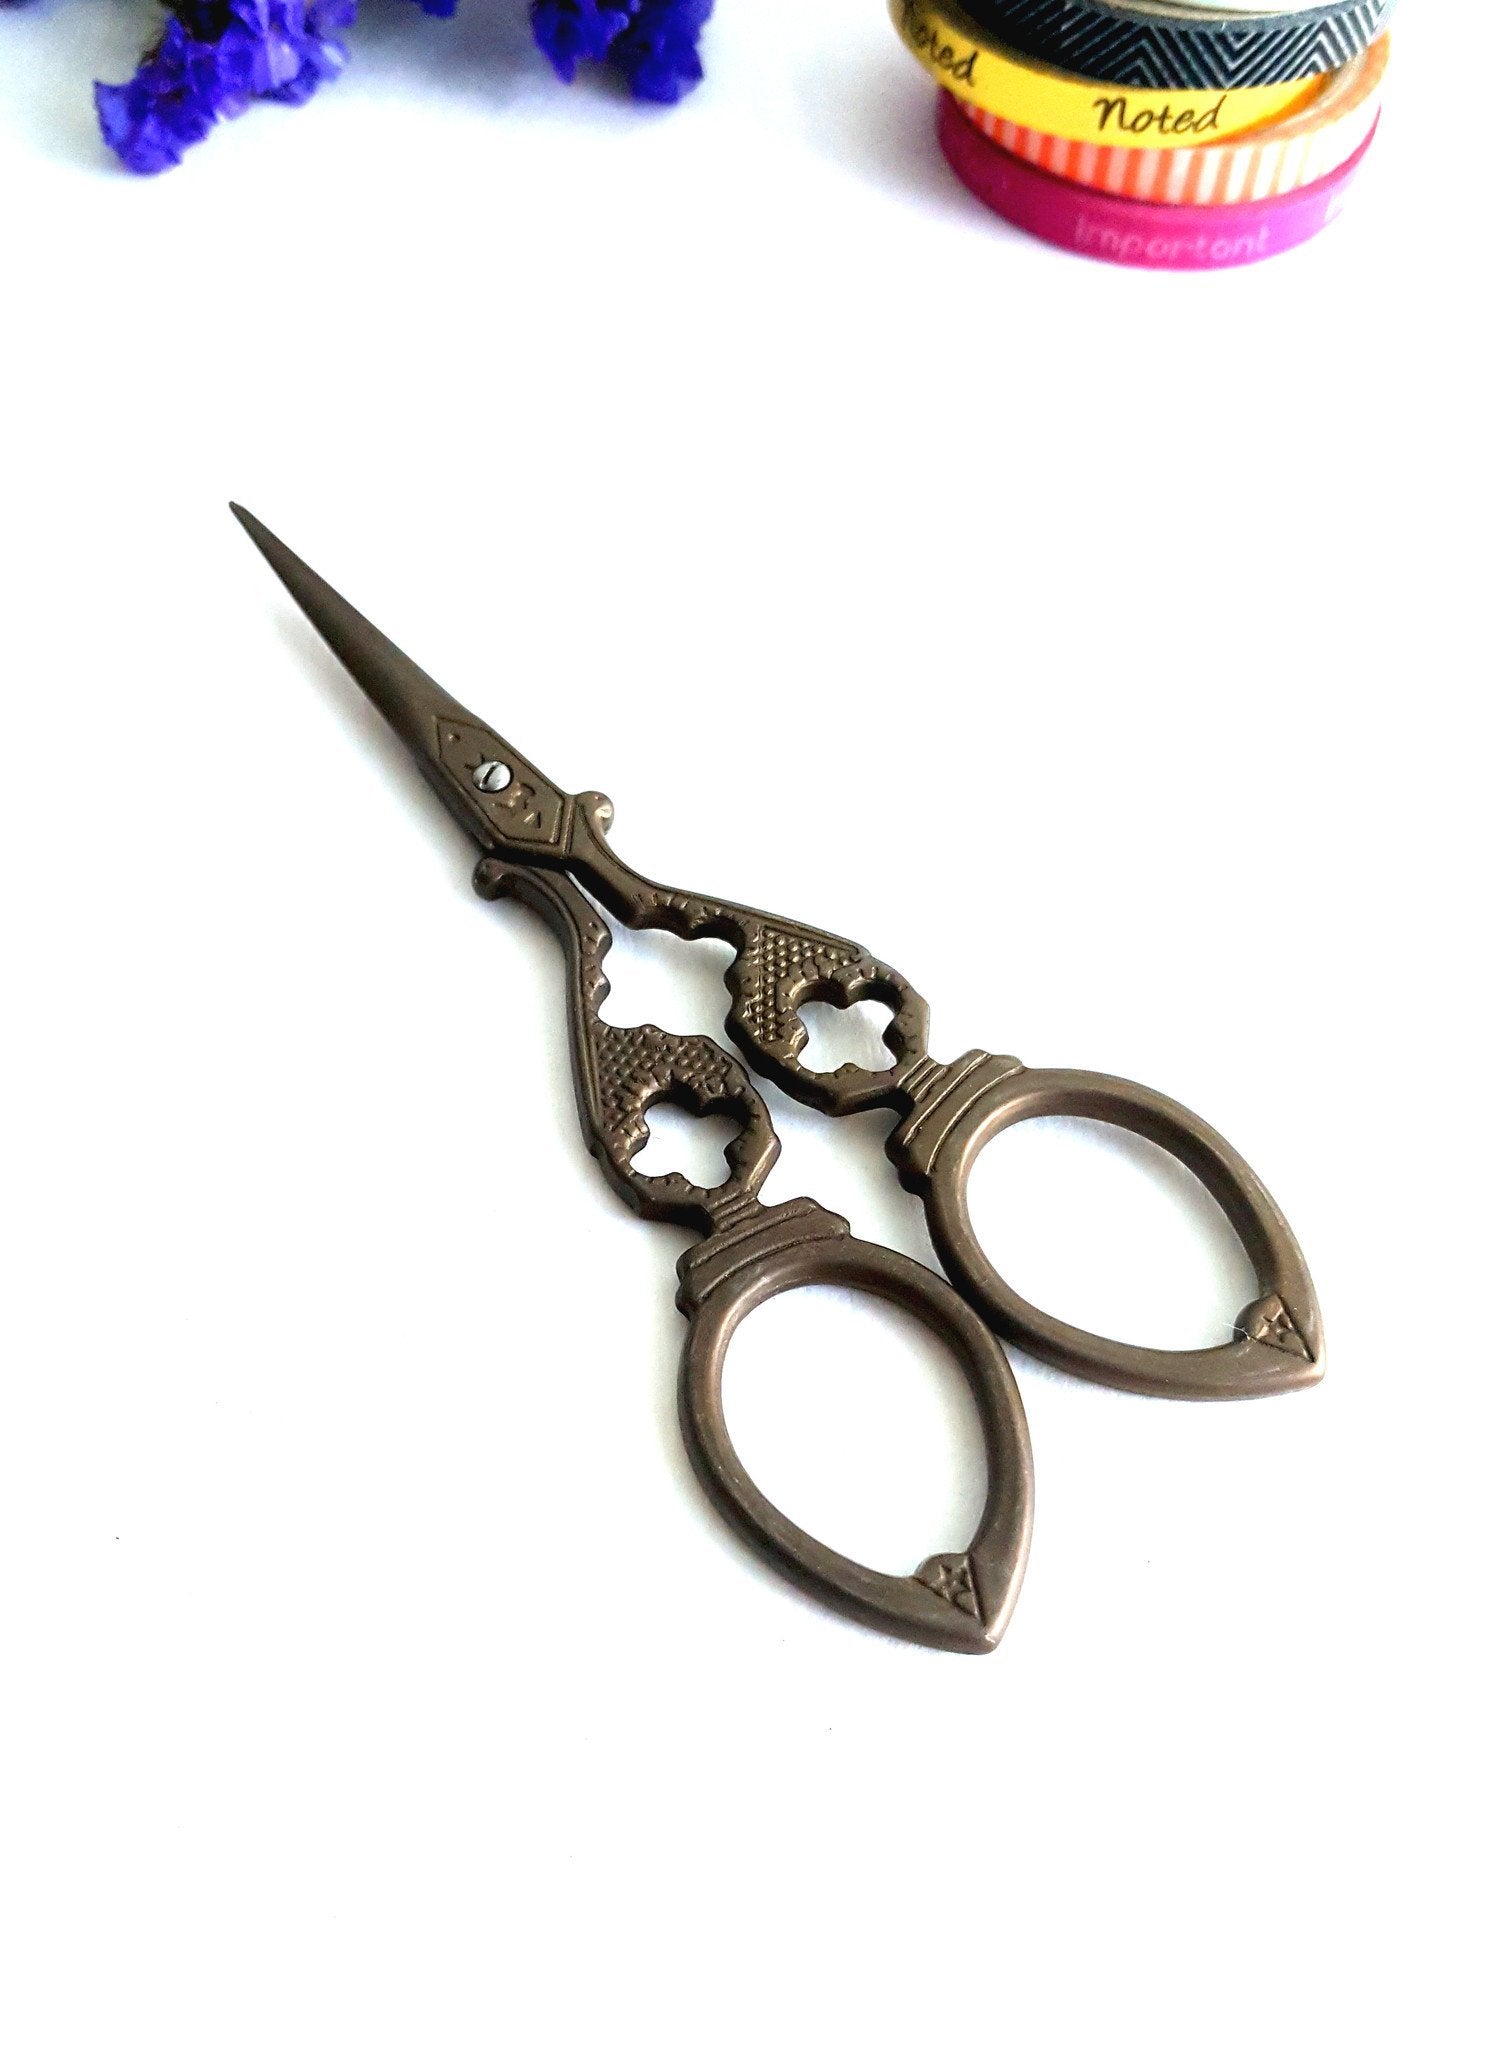 Vintage Craft Scissors (Flower) - Happiness Idea